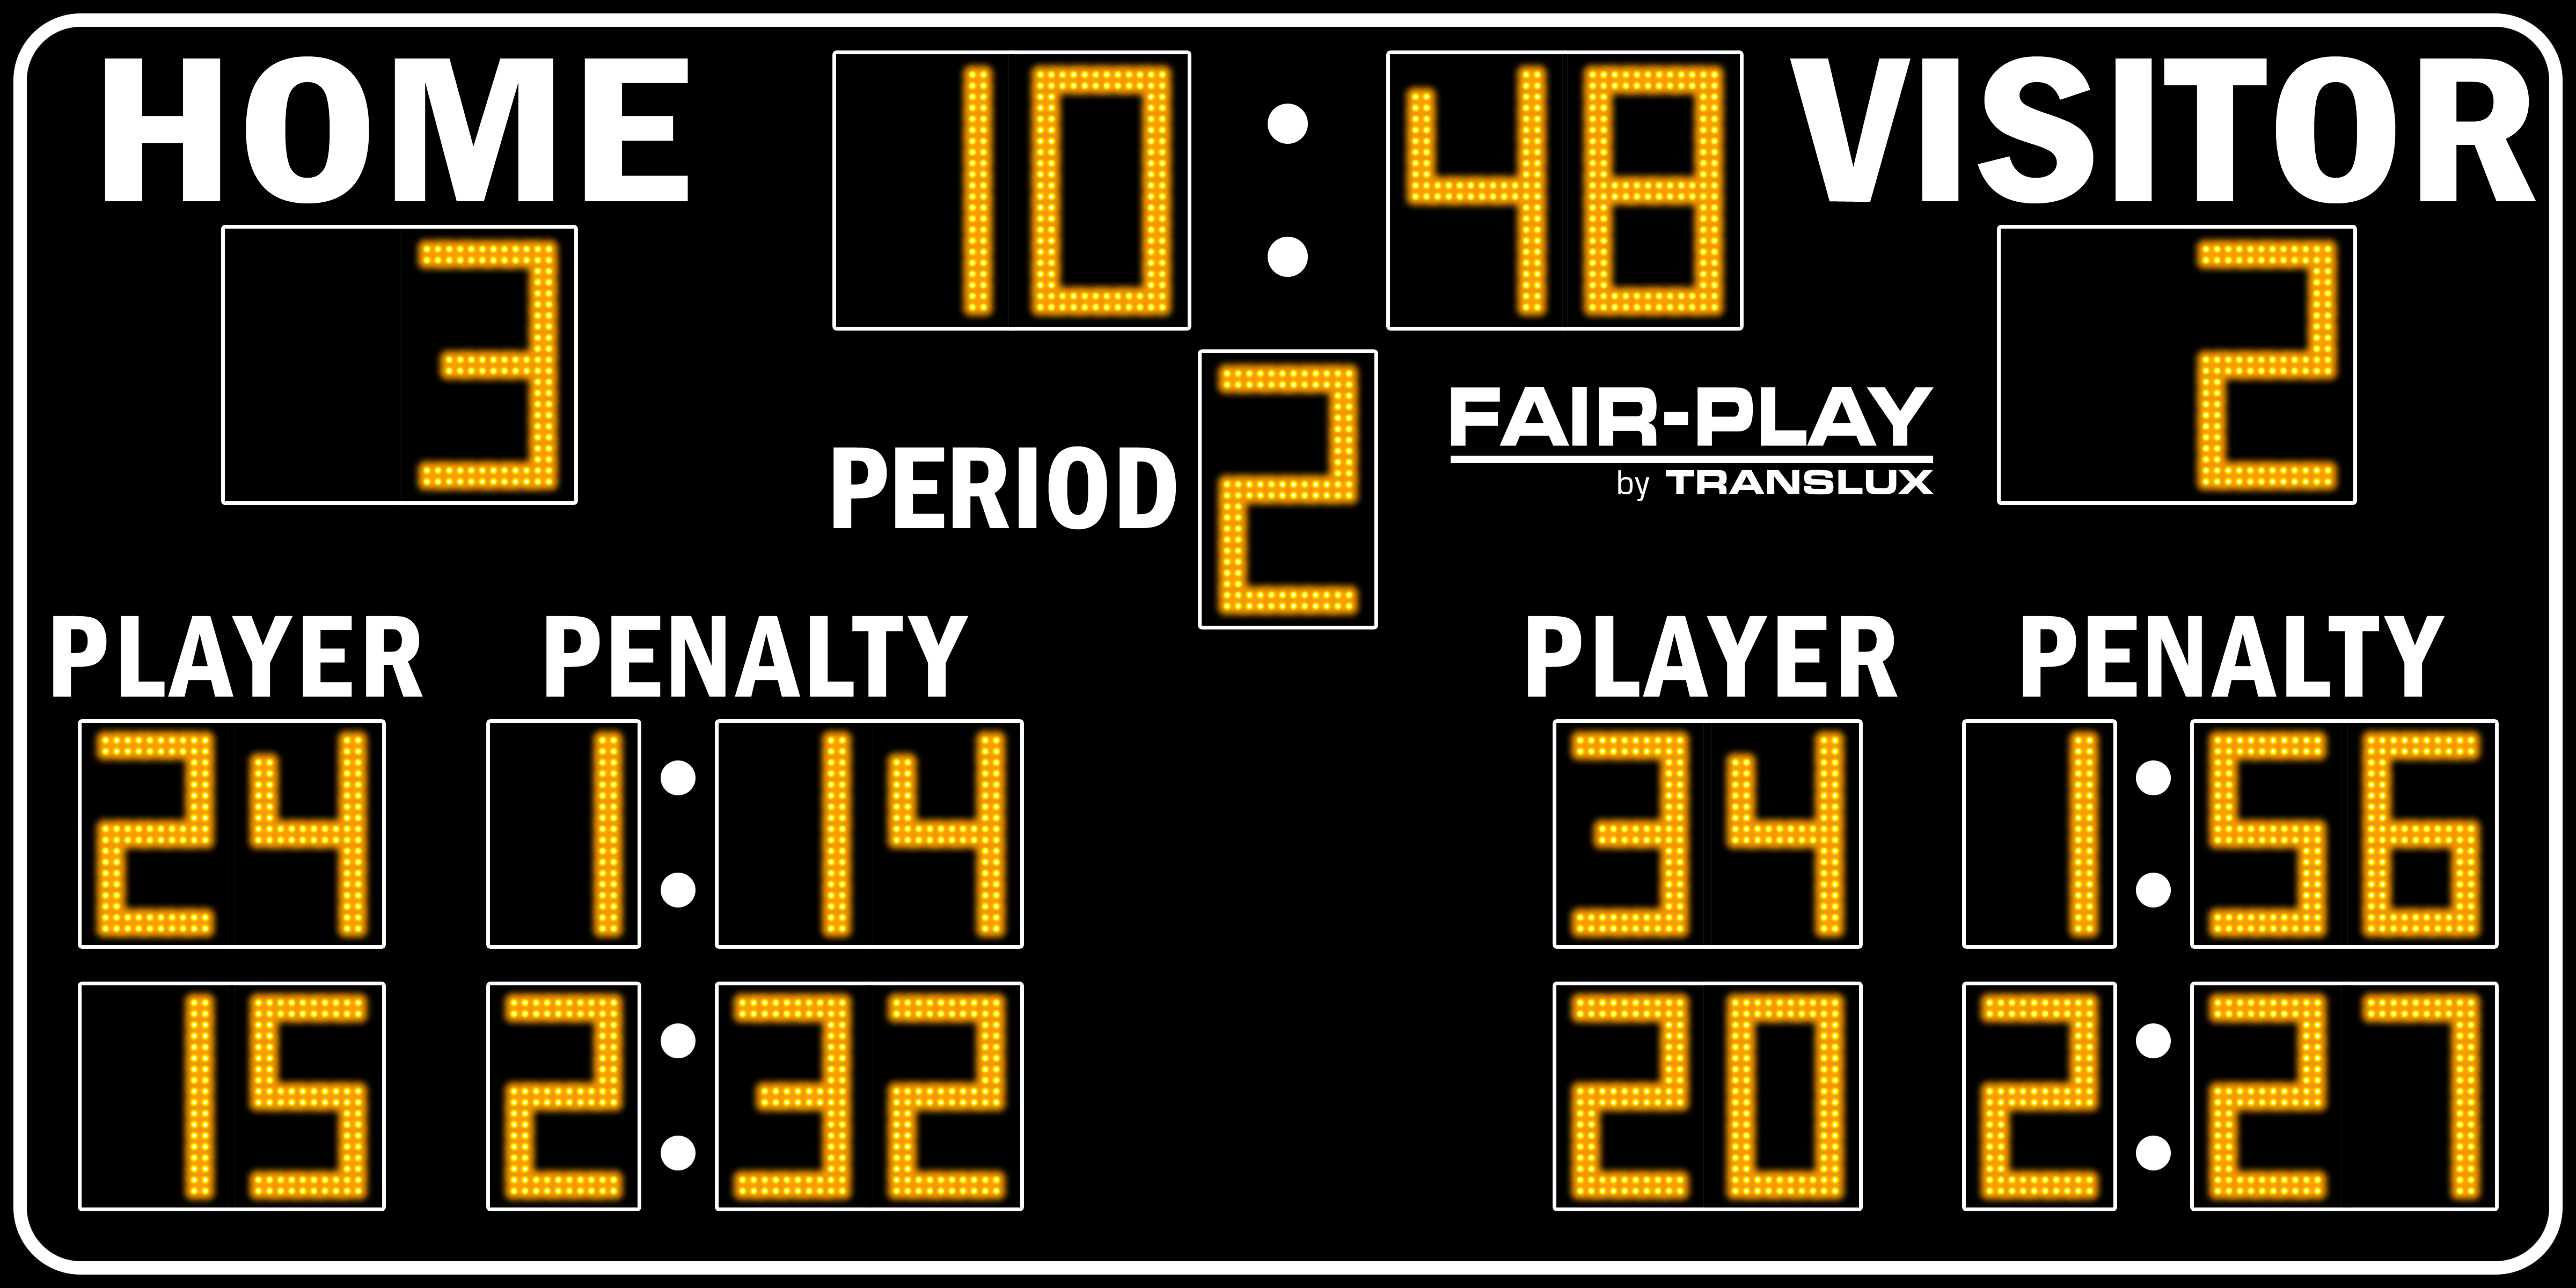 Fair-Play SC-1768-2 Soccer Scoreboard (8' x 16')